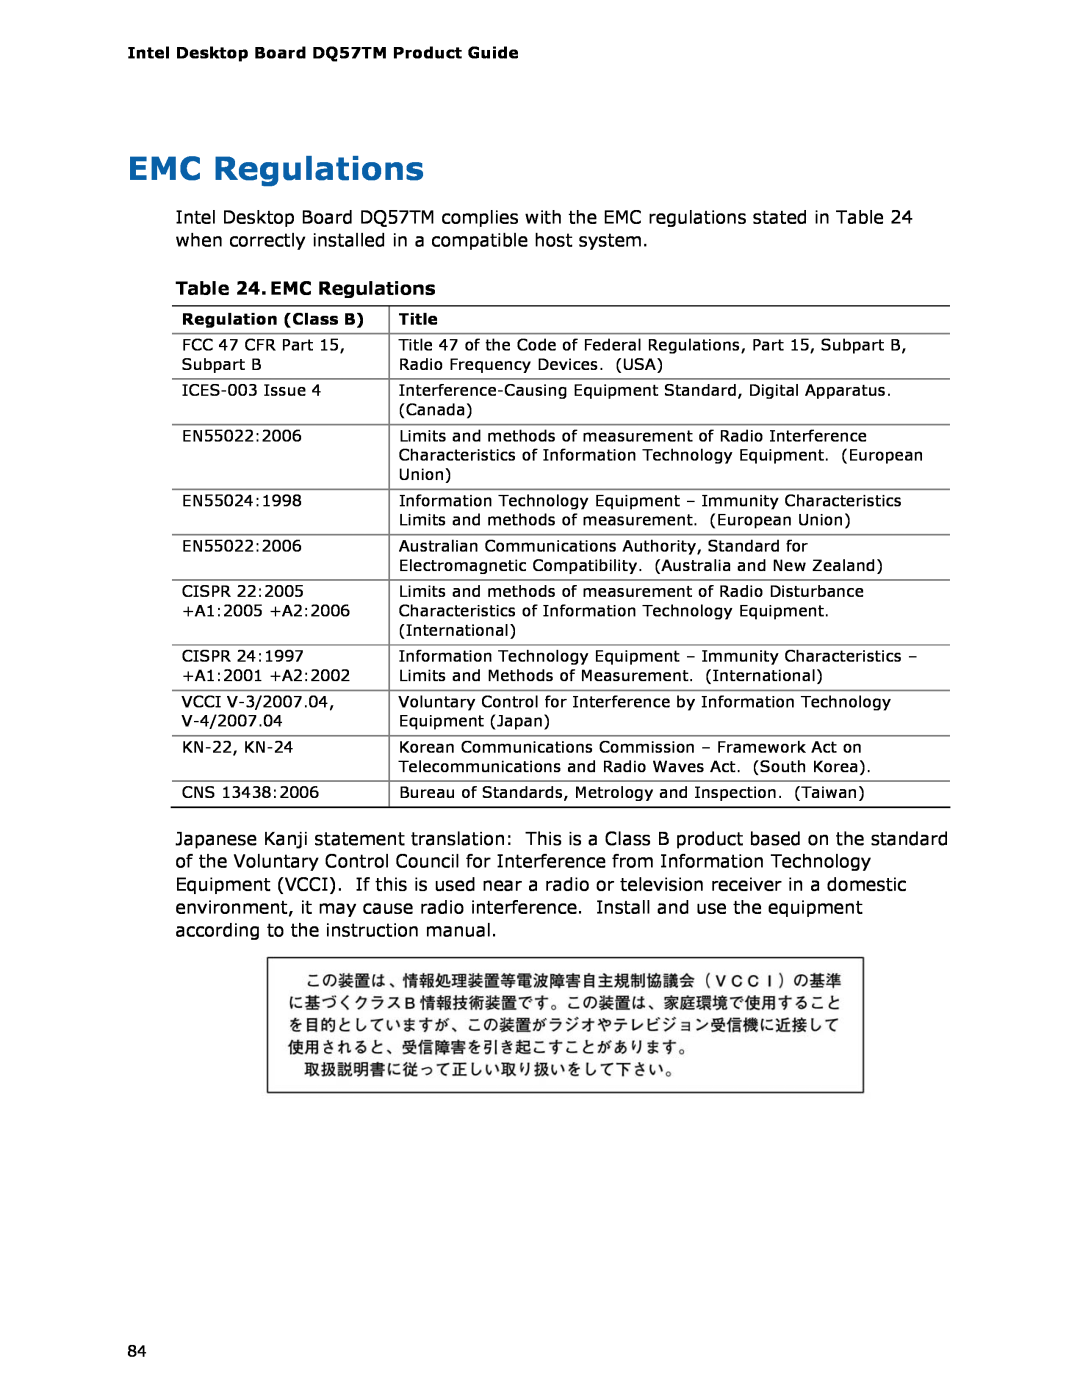 Intel DQ57TM manual EMC Regulations 